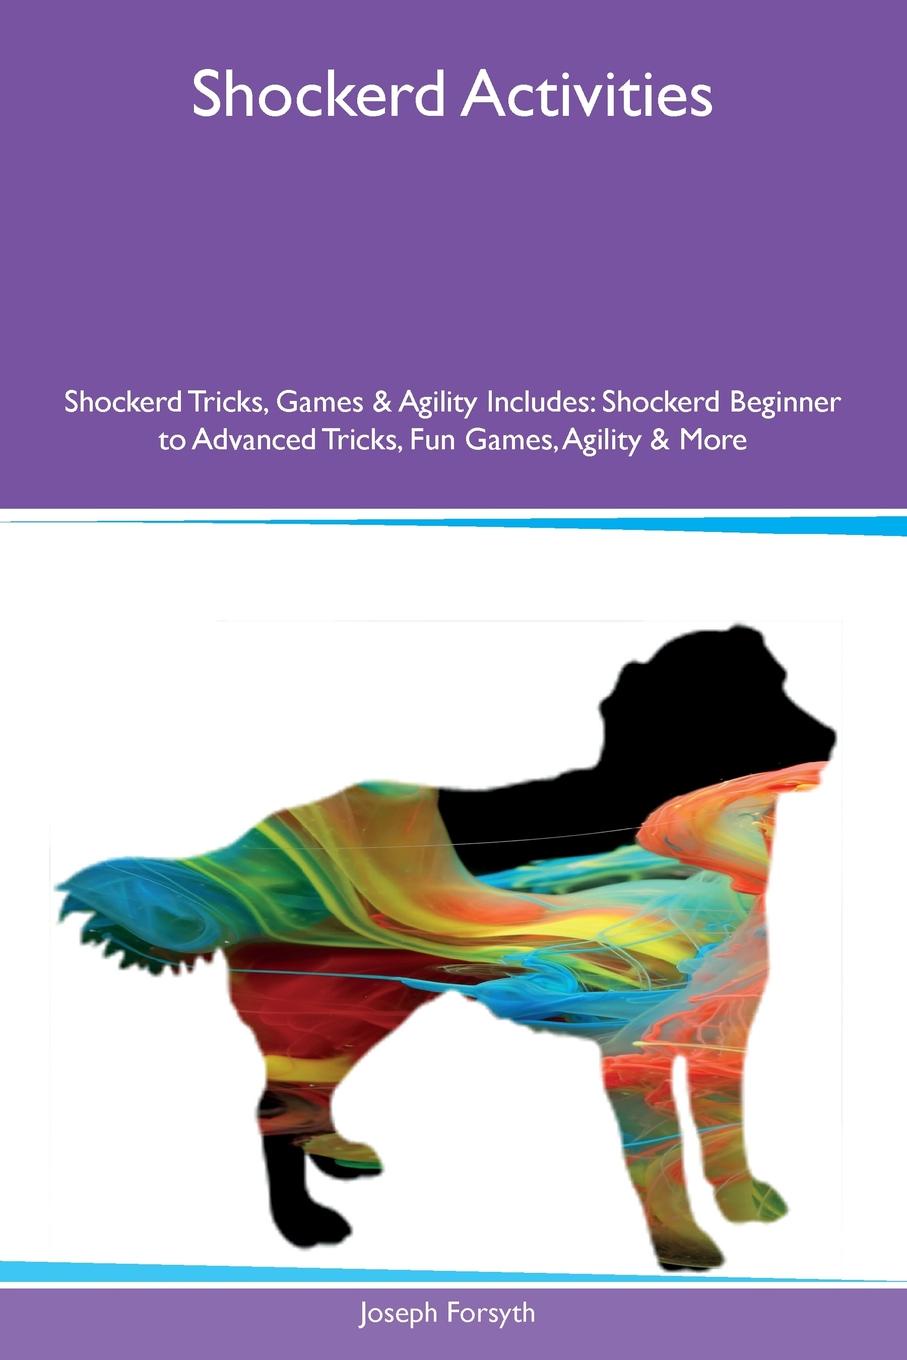 Shockerd Activities Shockerd Tricks, Games & Agility Includes. Shockerd Beginner to Advanced Tricks, Fun Games, Agility & More